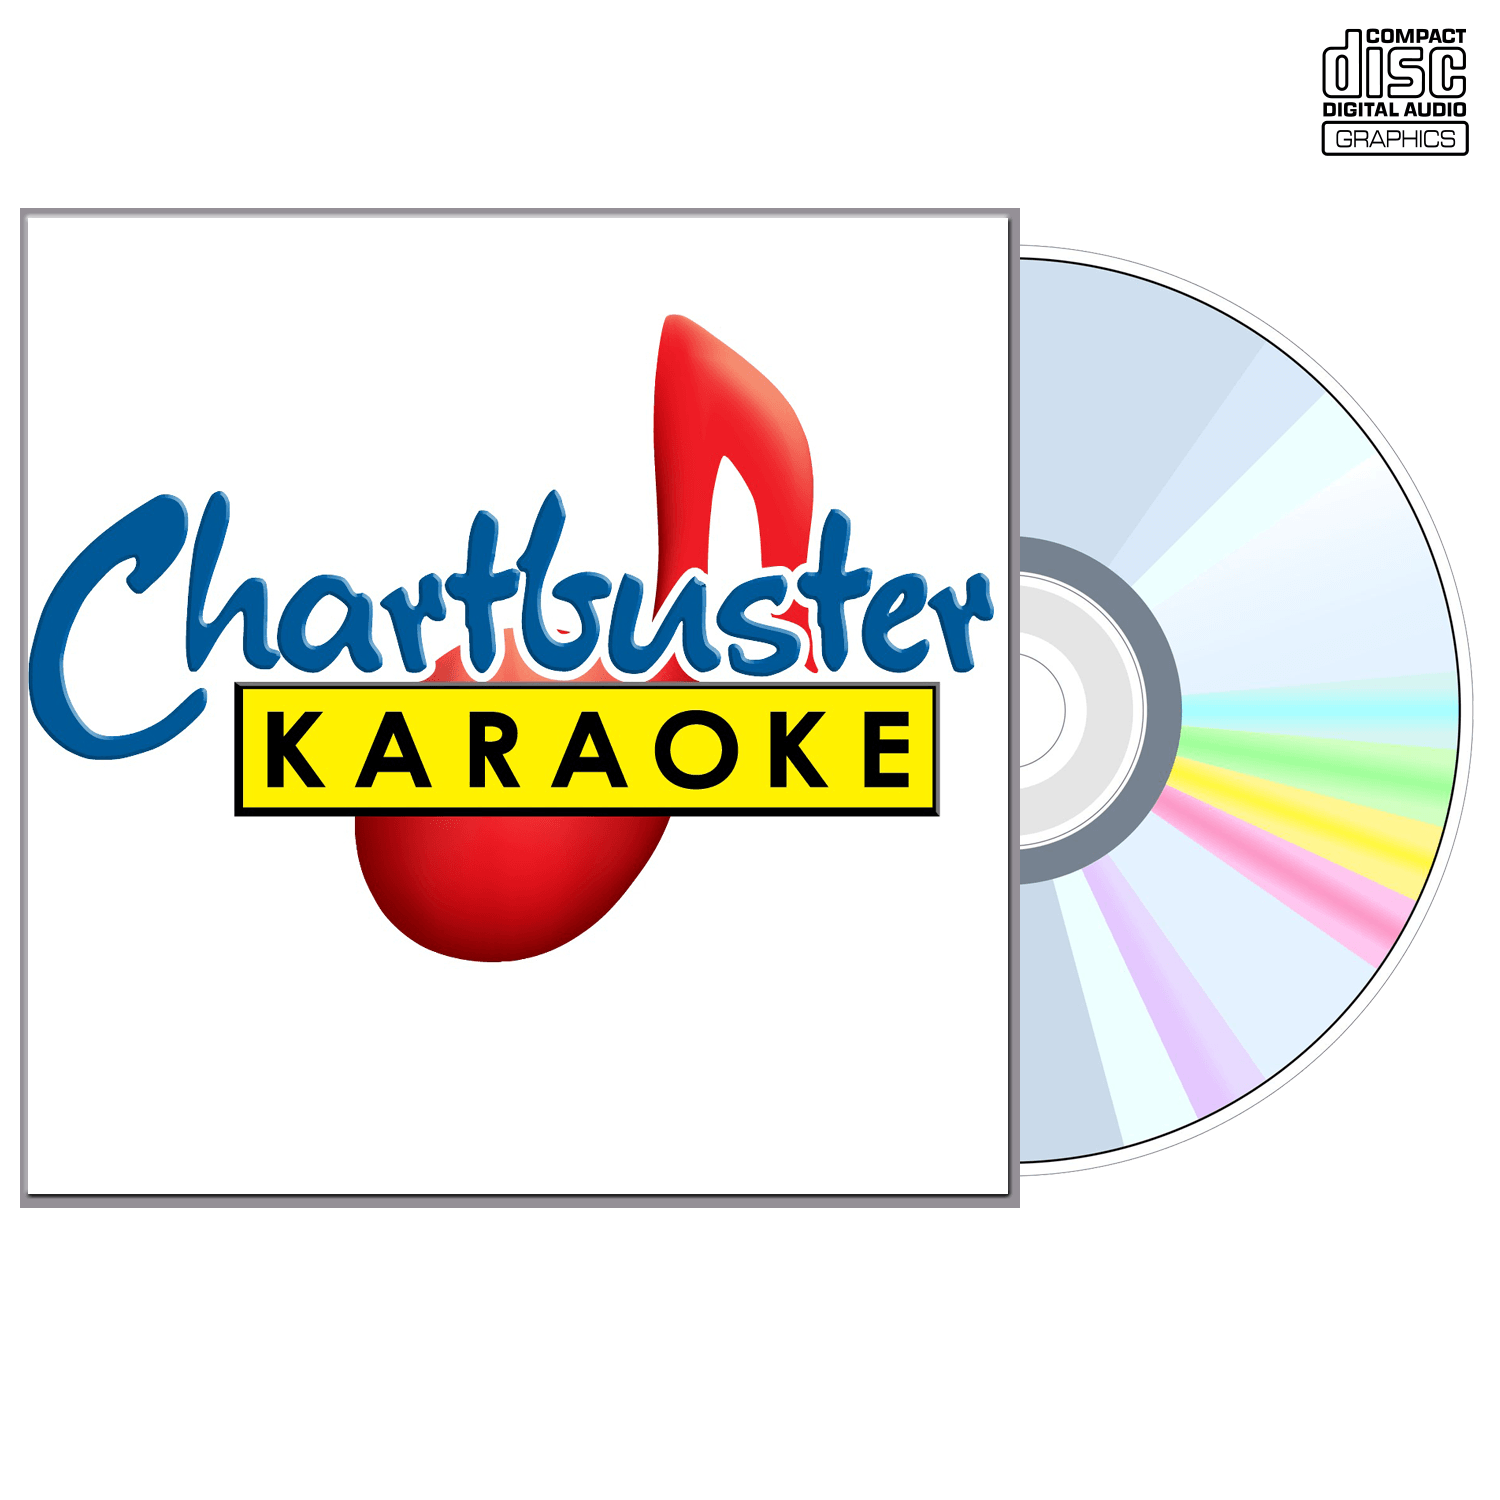 Sounds Of Sixties Vol 01 - CD+G - Chartbuster Karaoke - Karaoke Home Entertainment